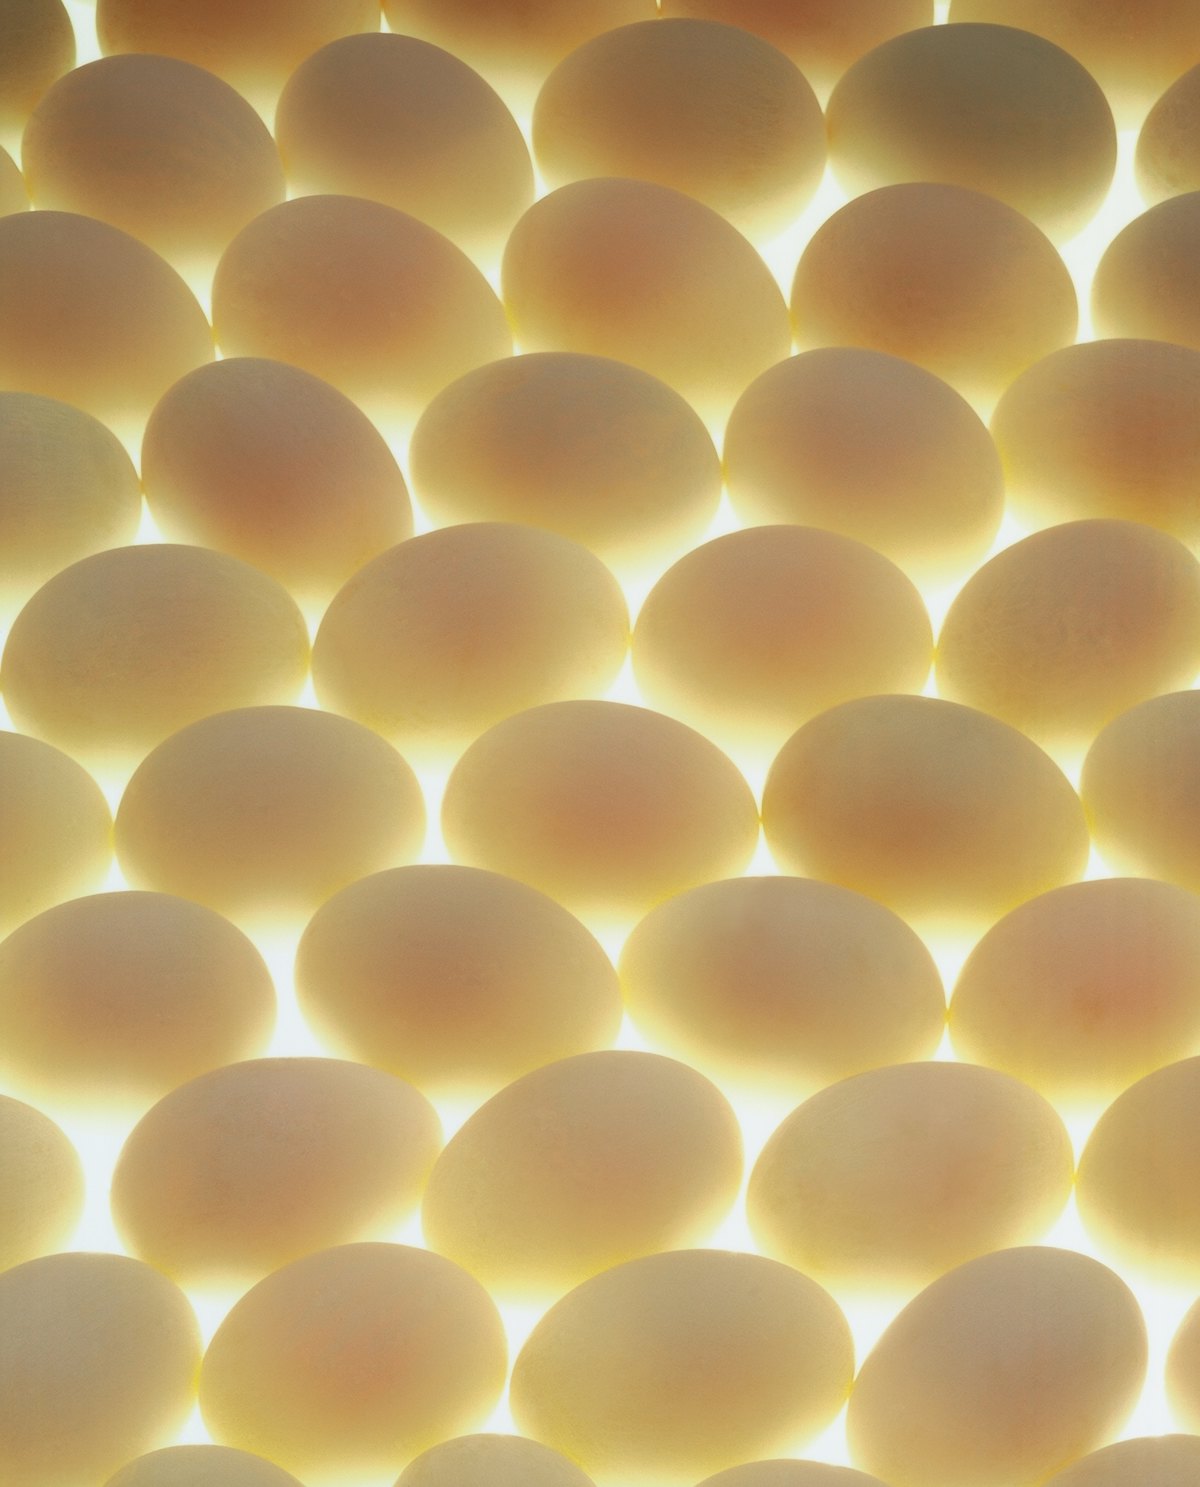 White Eggs Lighted Bkgrnd.65c11016eb40f ?auto=format%2Ccompress&fit=max&q=70&w=1200